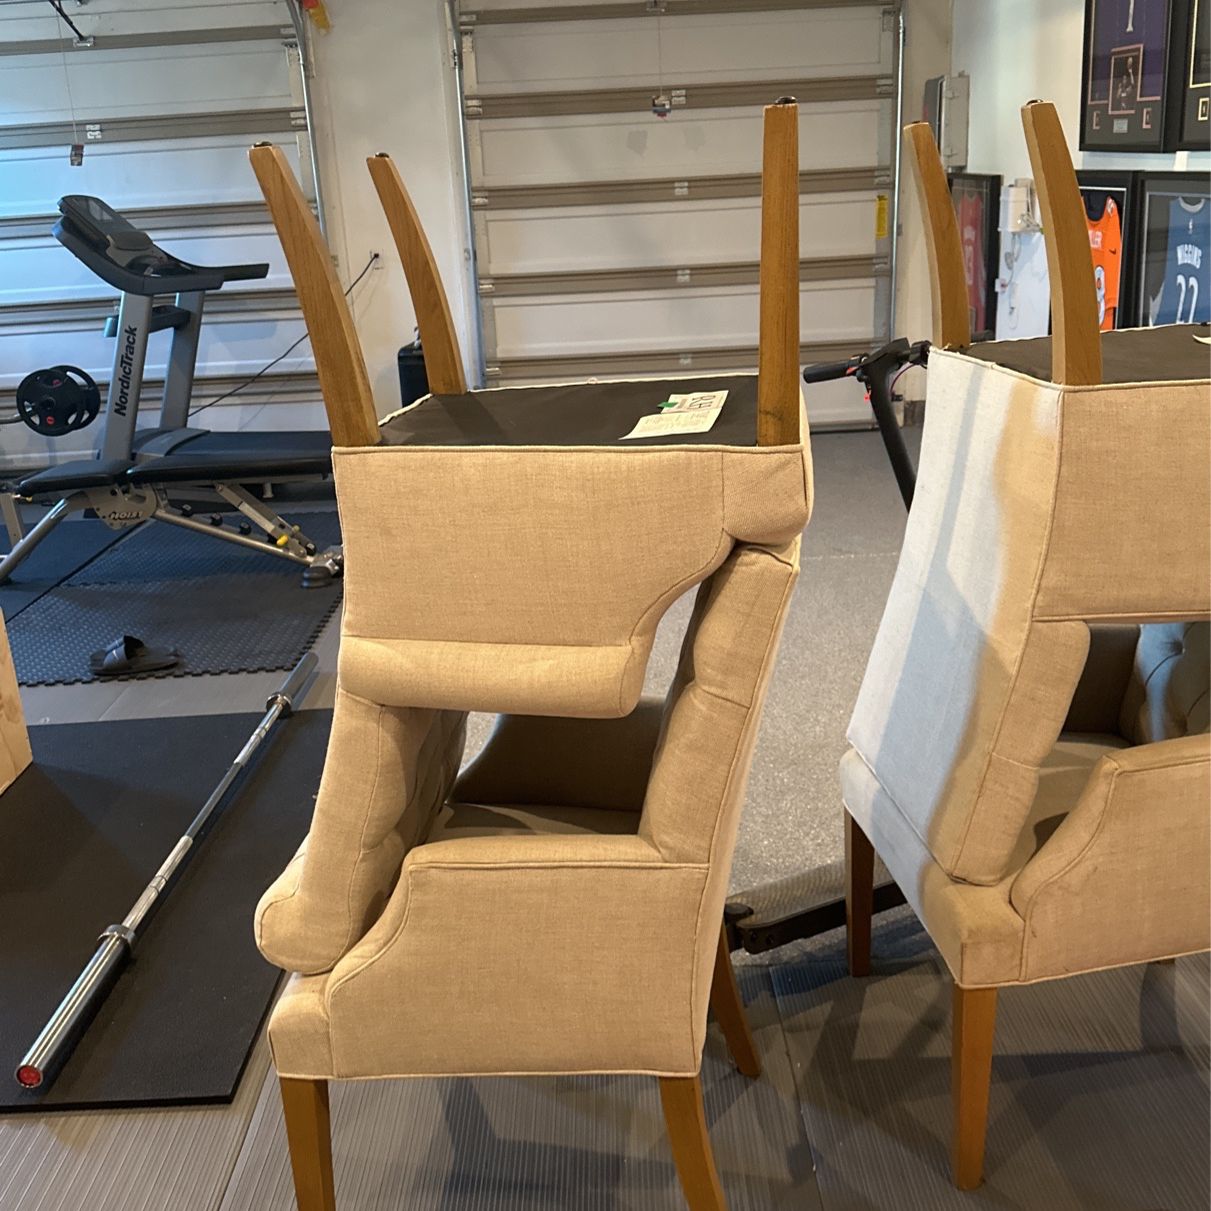 Restoration Hardware Chairs 